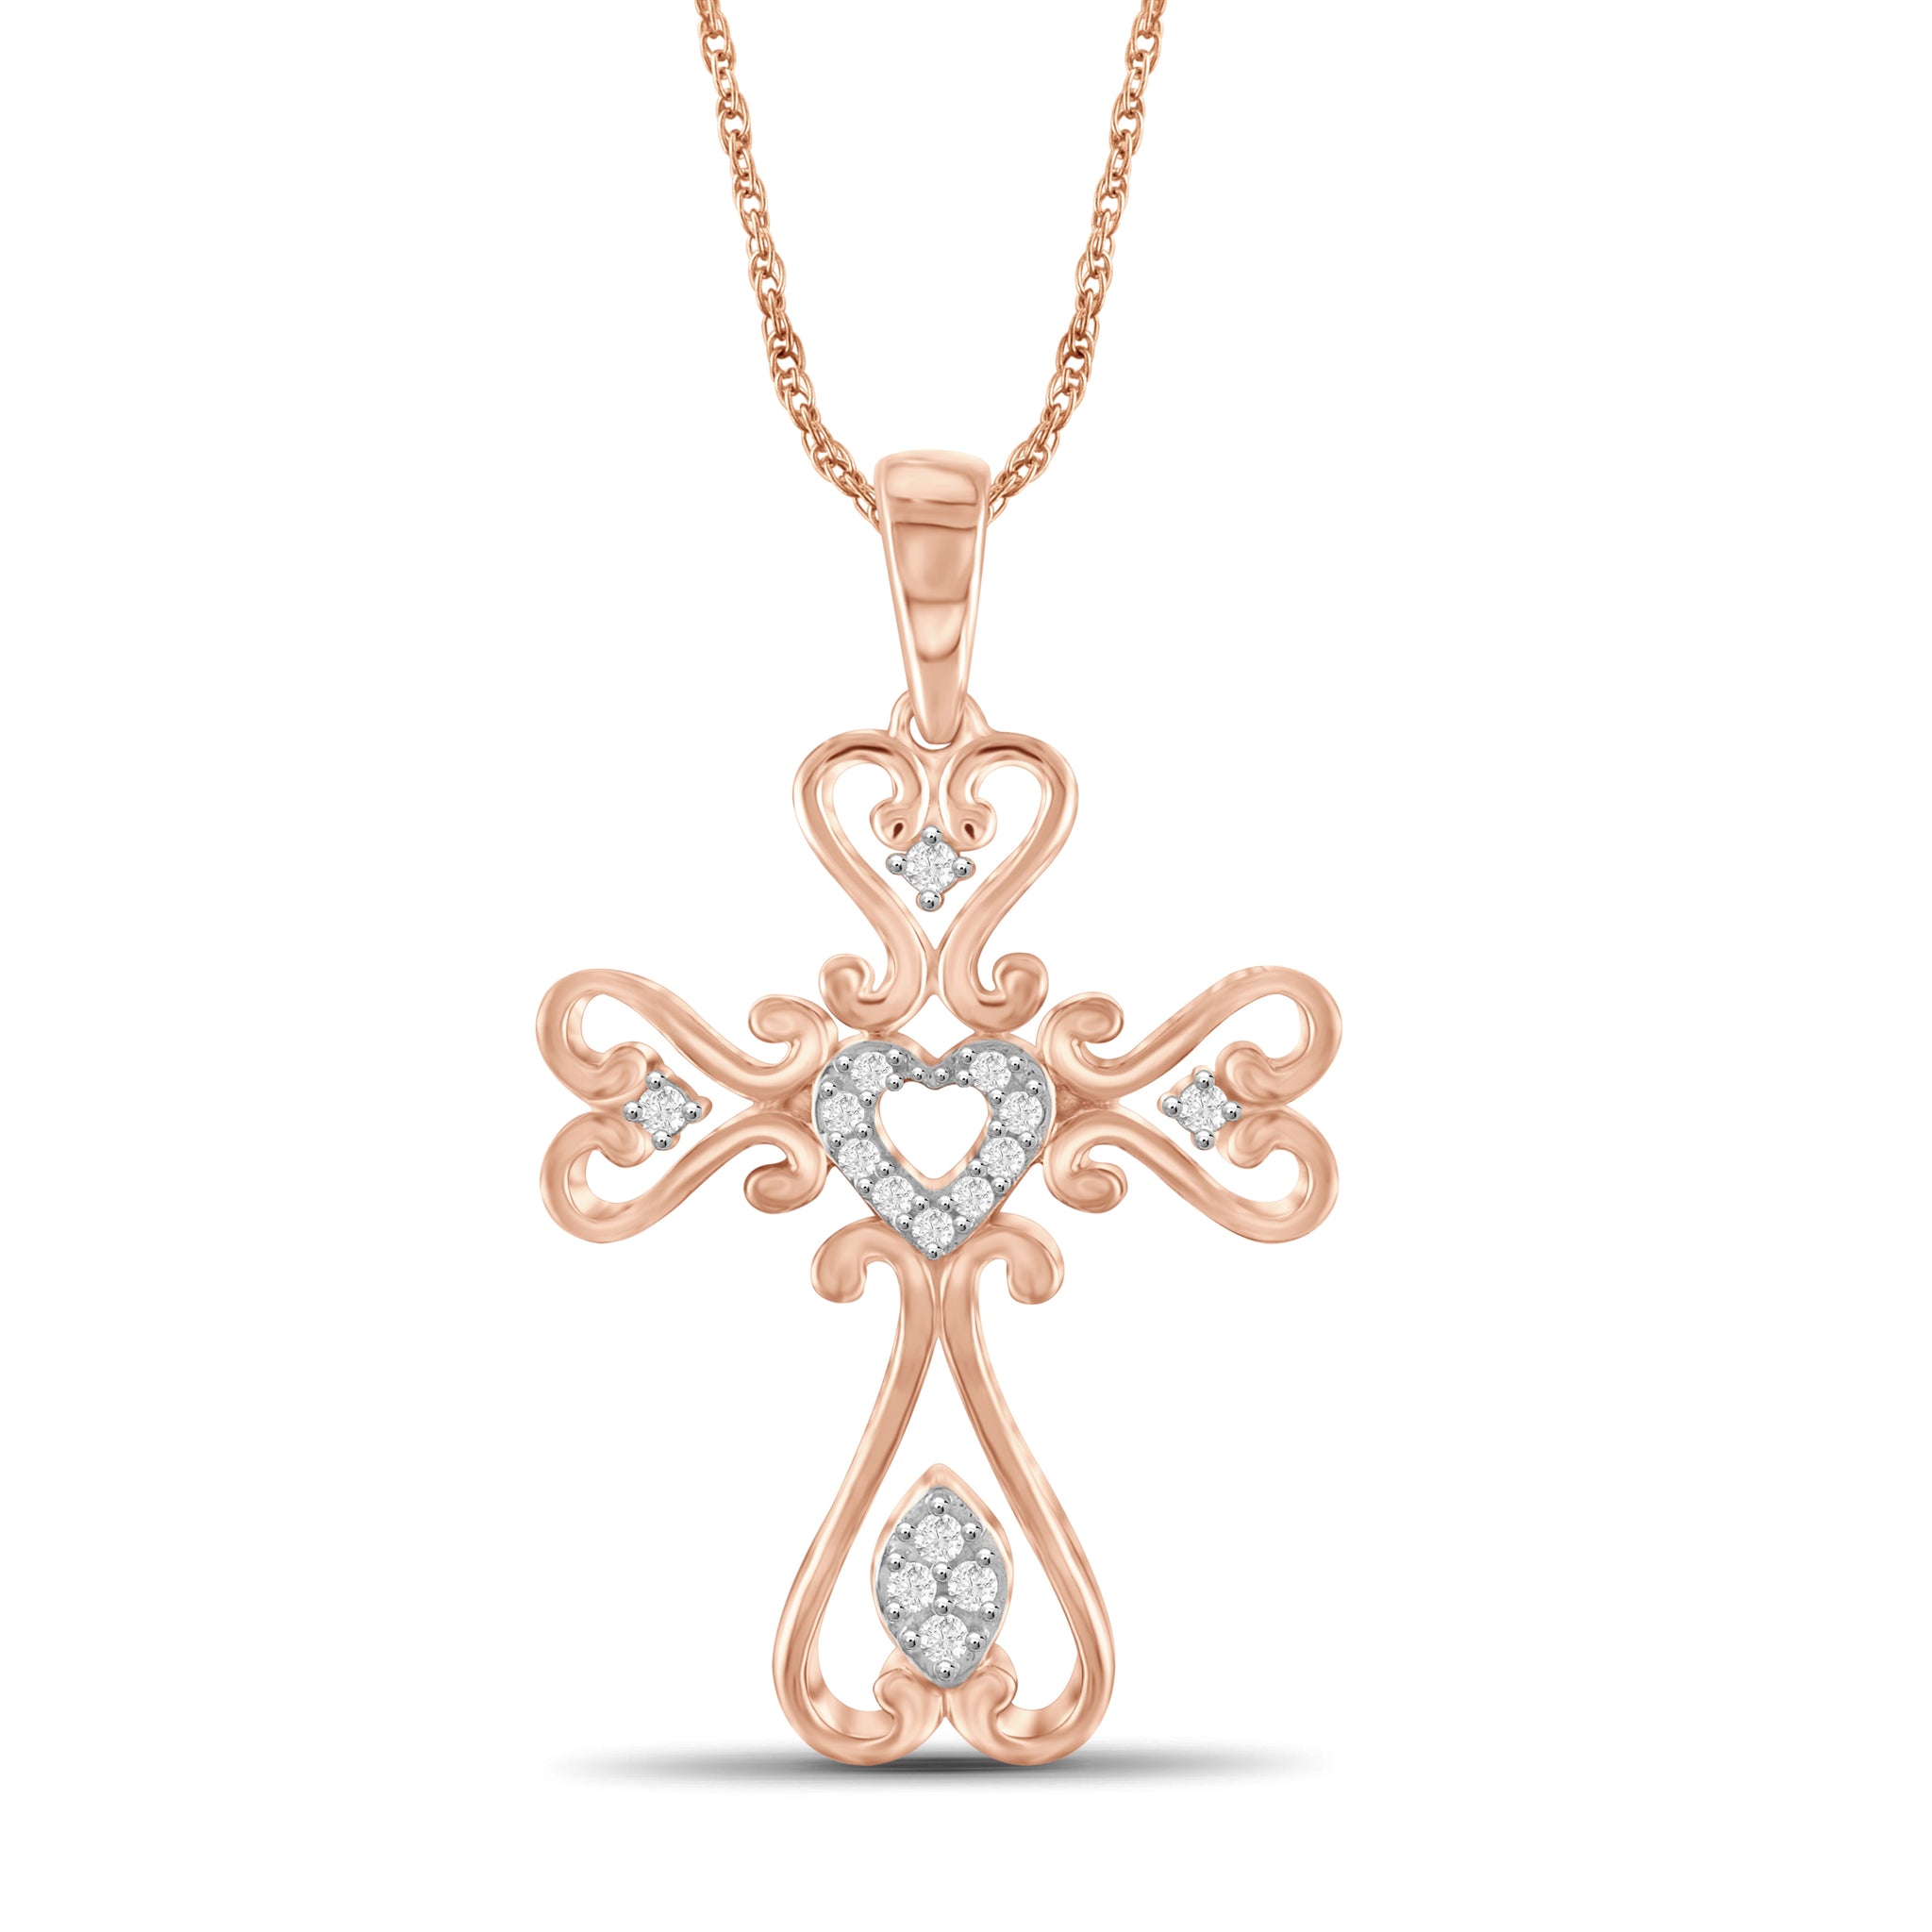 JewelonFire 1/7 Carat T.W. White Diamond Rose Gold Over Silver Cross Pendant